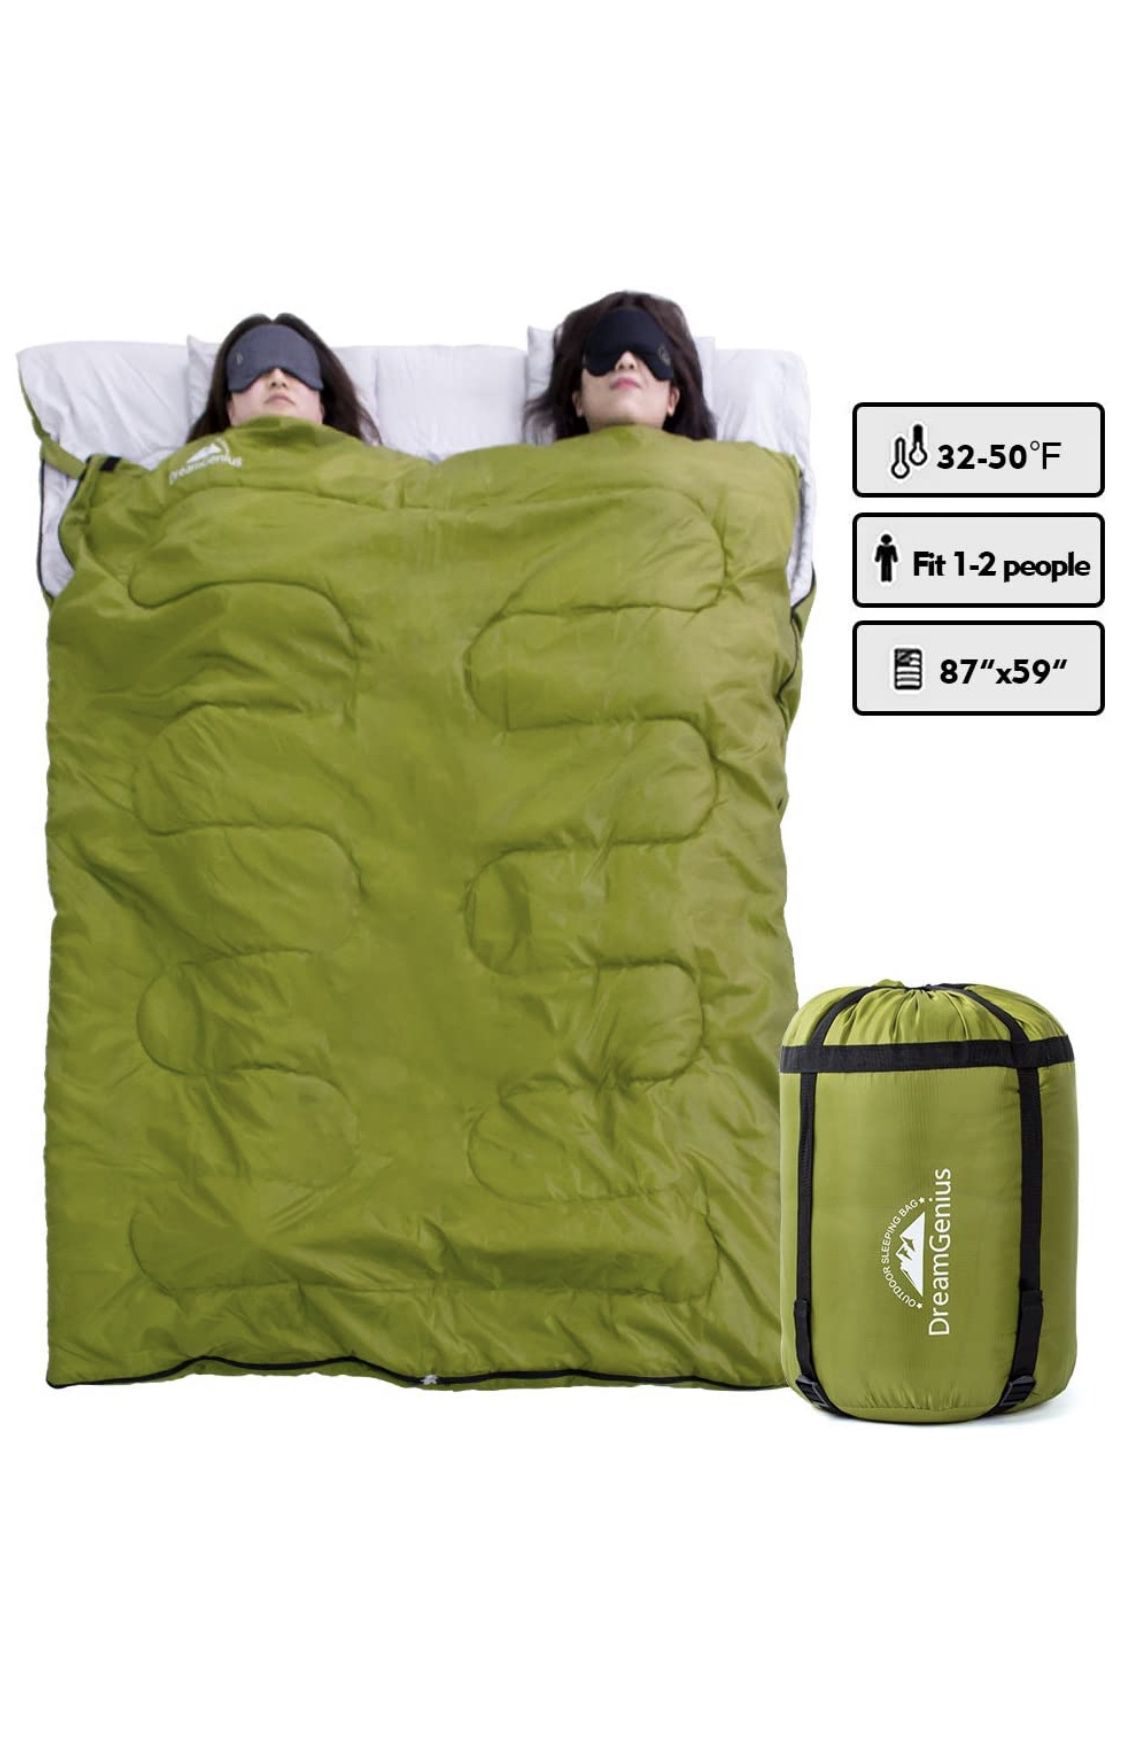 DreamGenius Double Sleeping Bag for Camping Waterproof Sleeping Bags for Adults